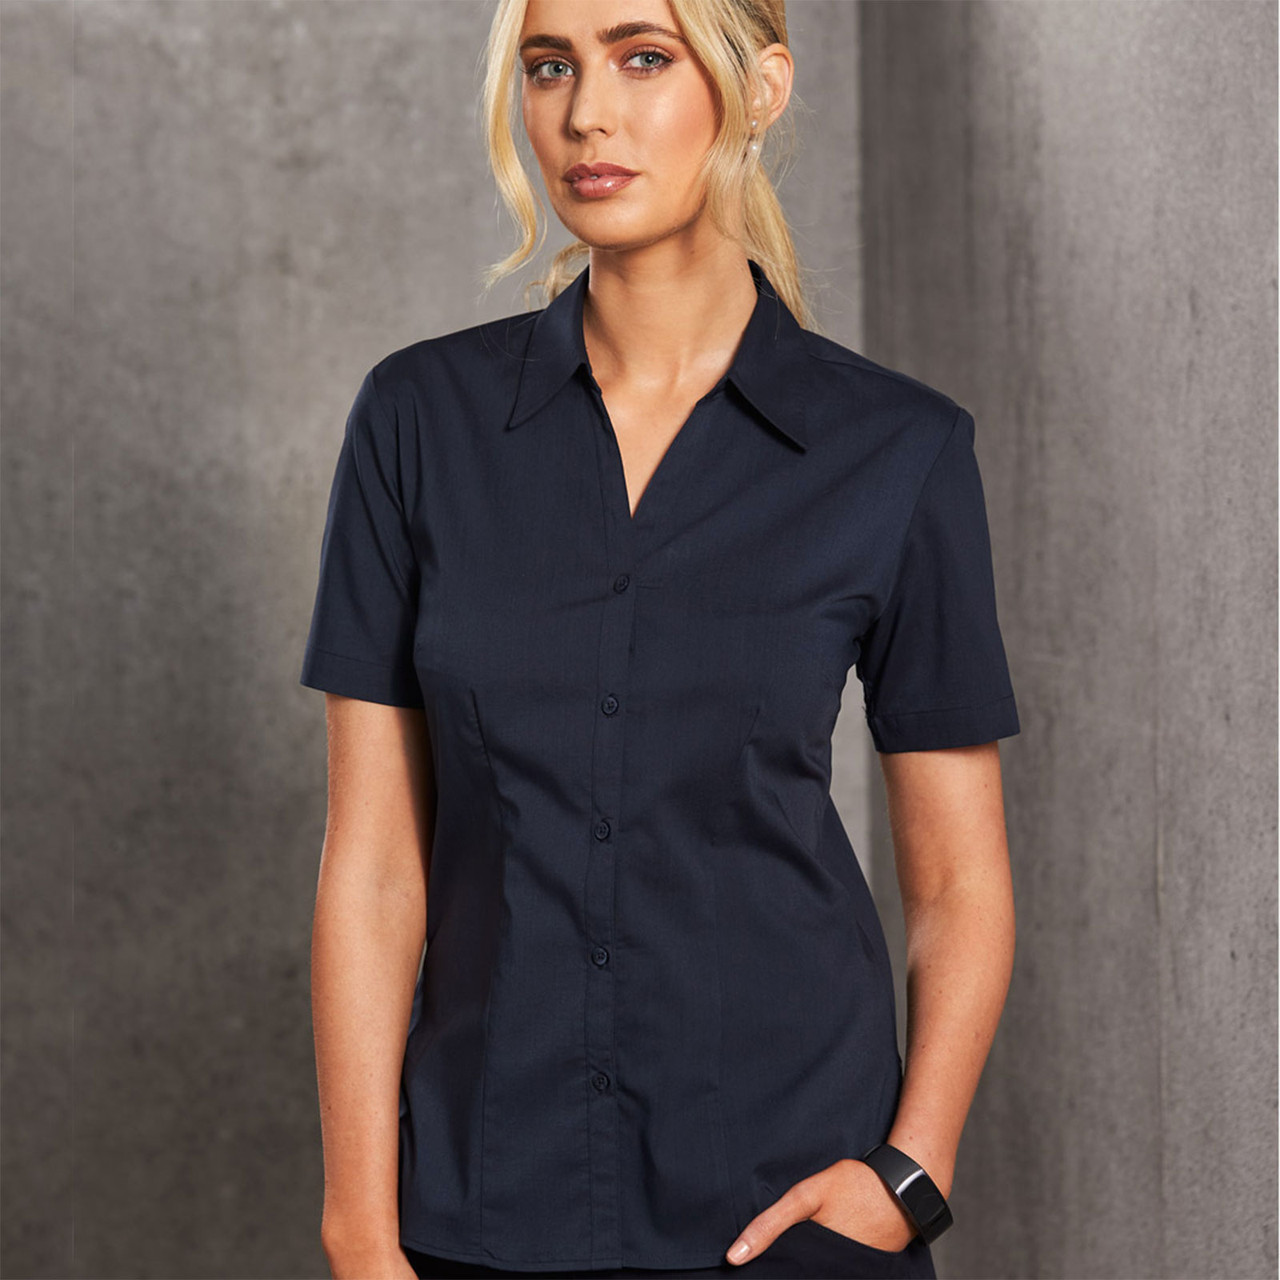 Womens Wrinkle Resistance Short Sleeve Shirt | Shop Work Shirts Online